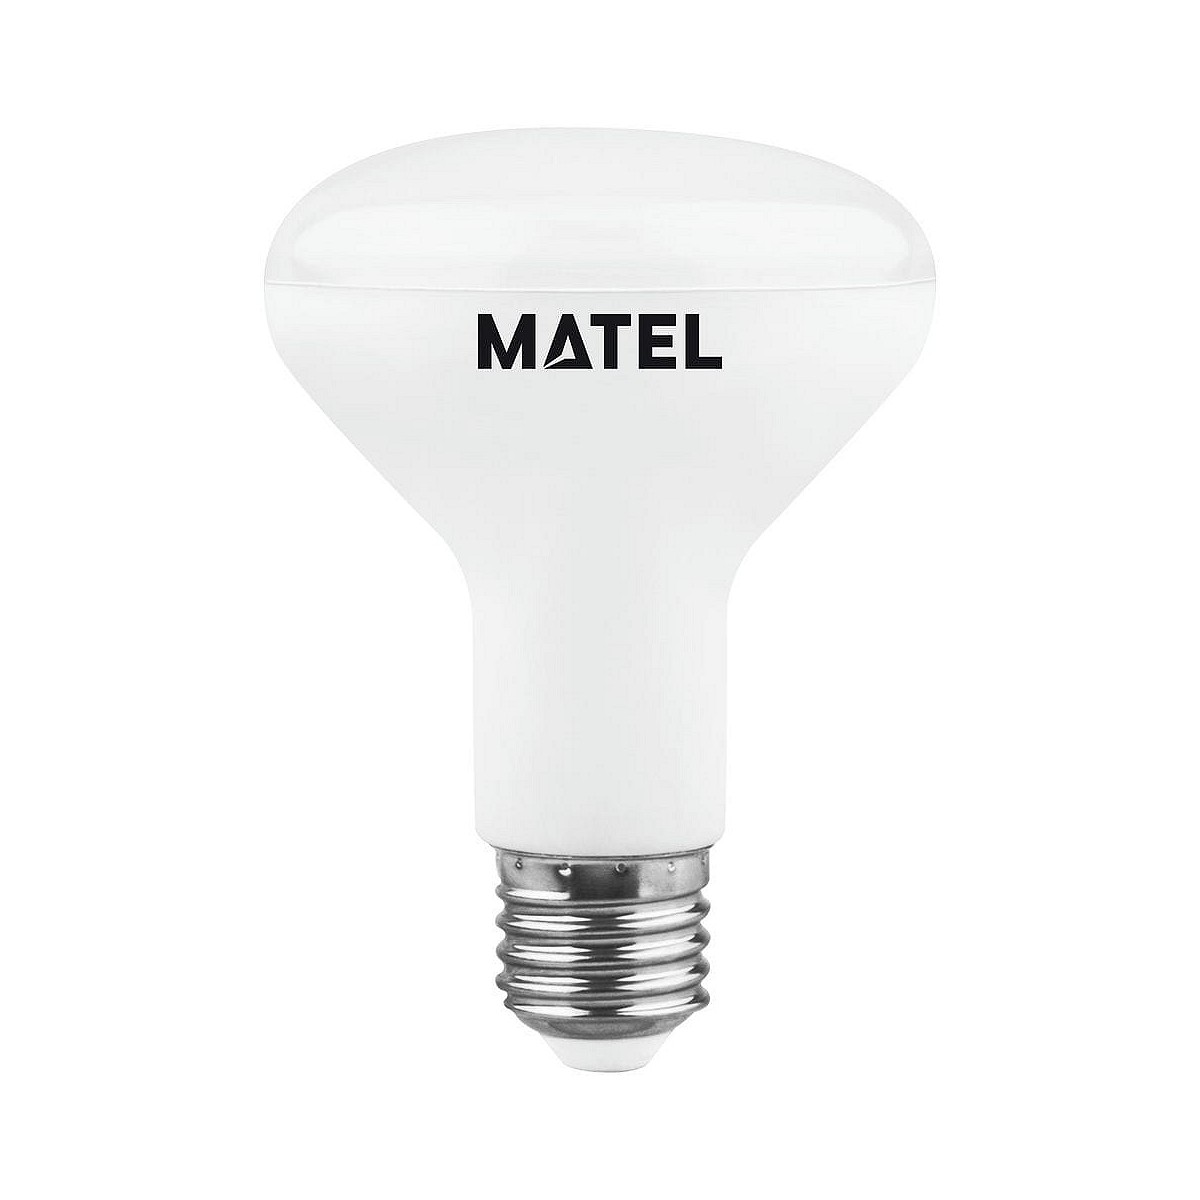 Compra BOMBILLA LED REFLECTORA MATEL E27 R80 10W CÁLIDA al mejor precio